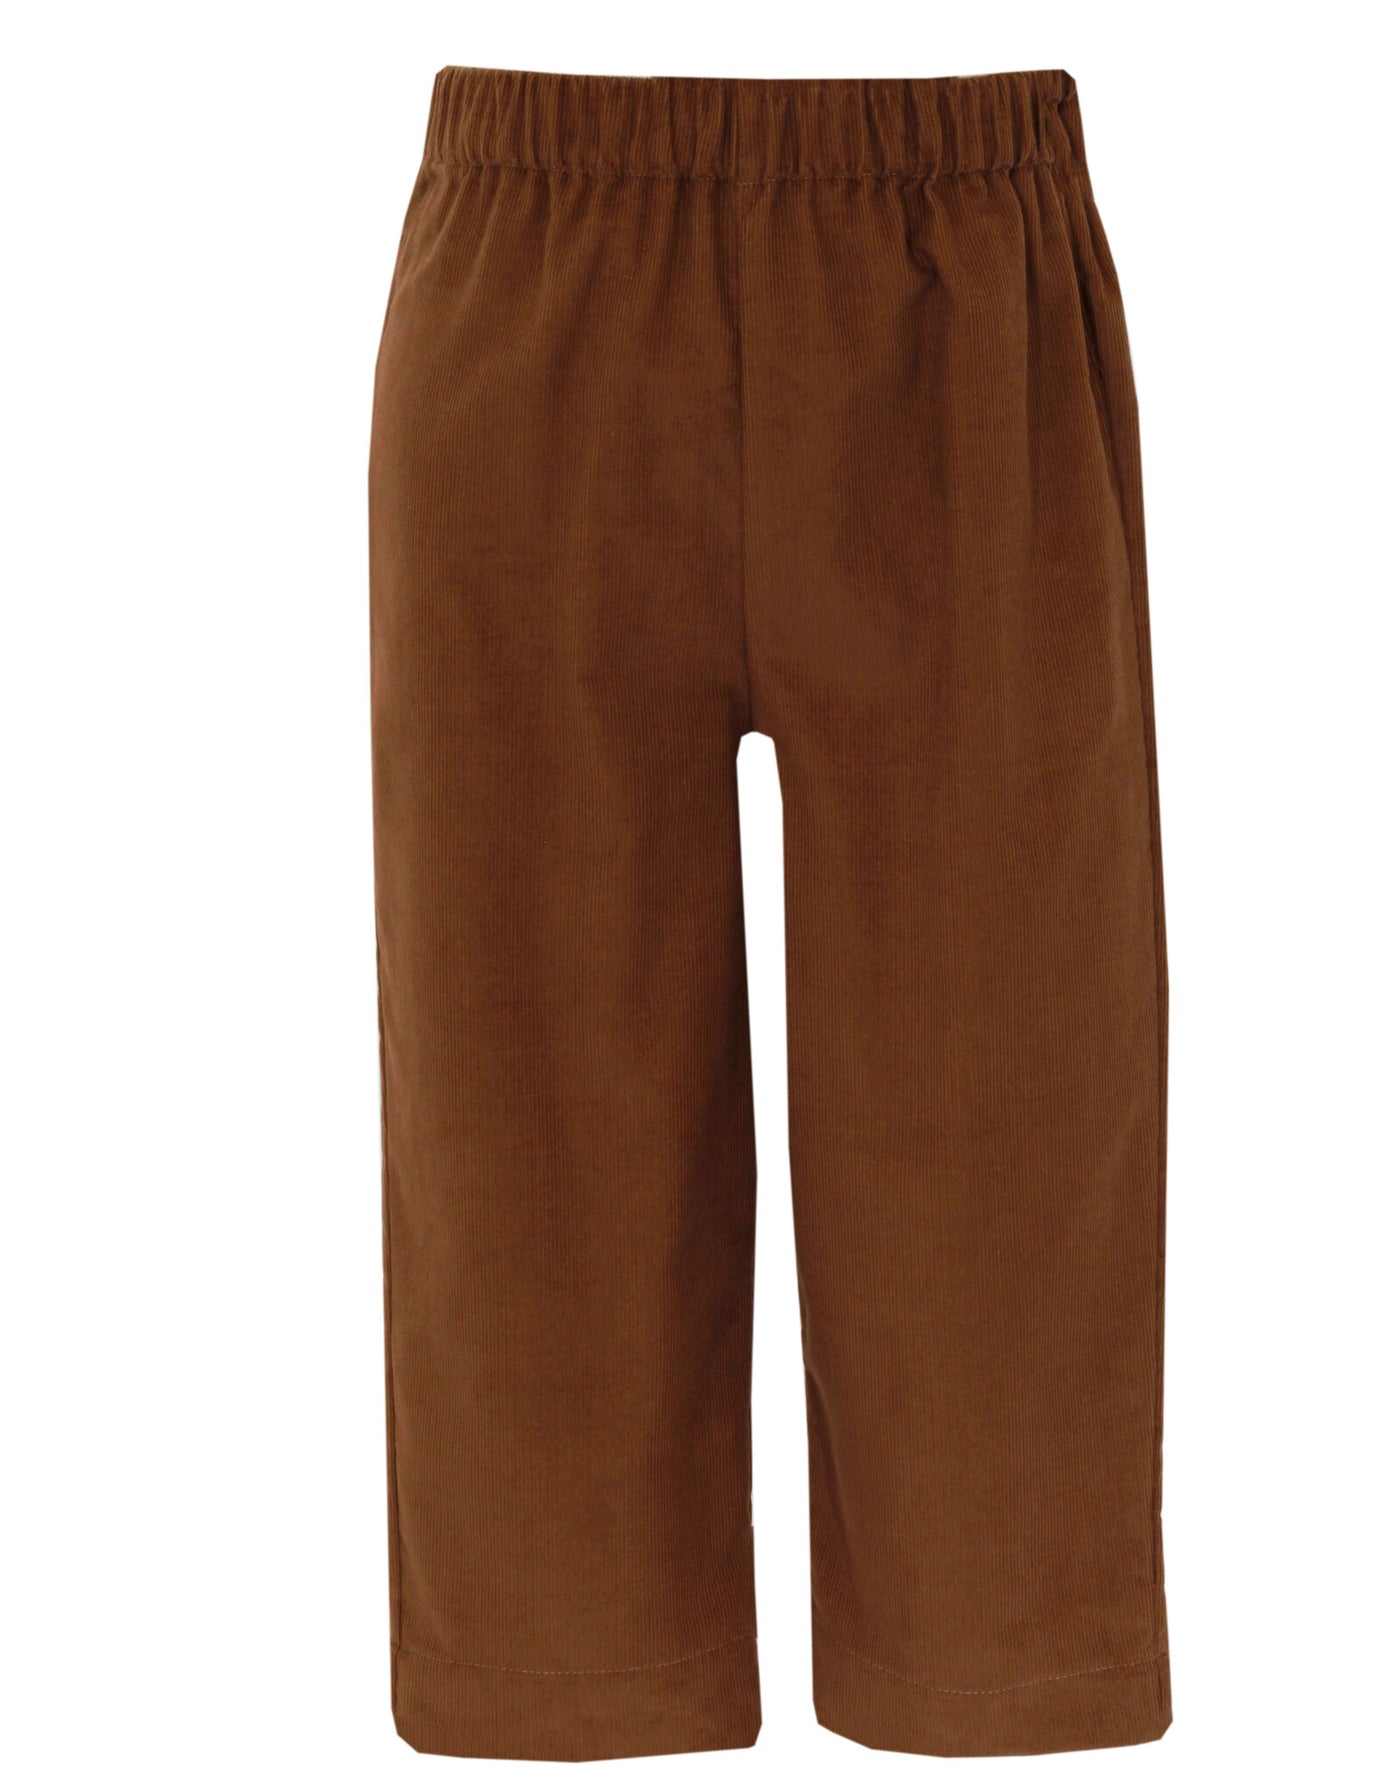 Camel Brown Corduroy Pants